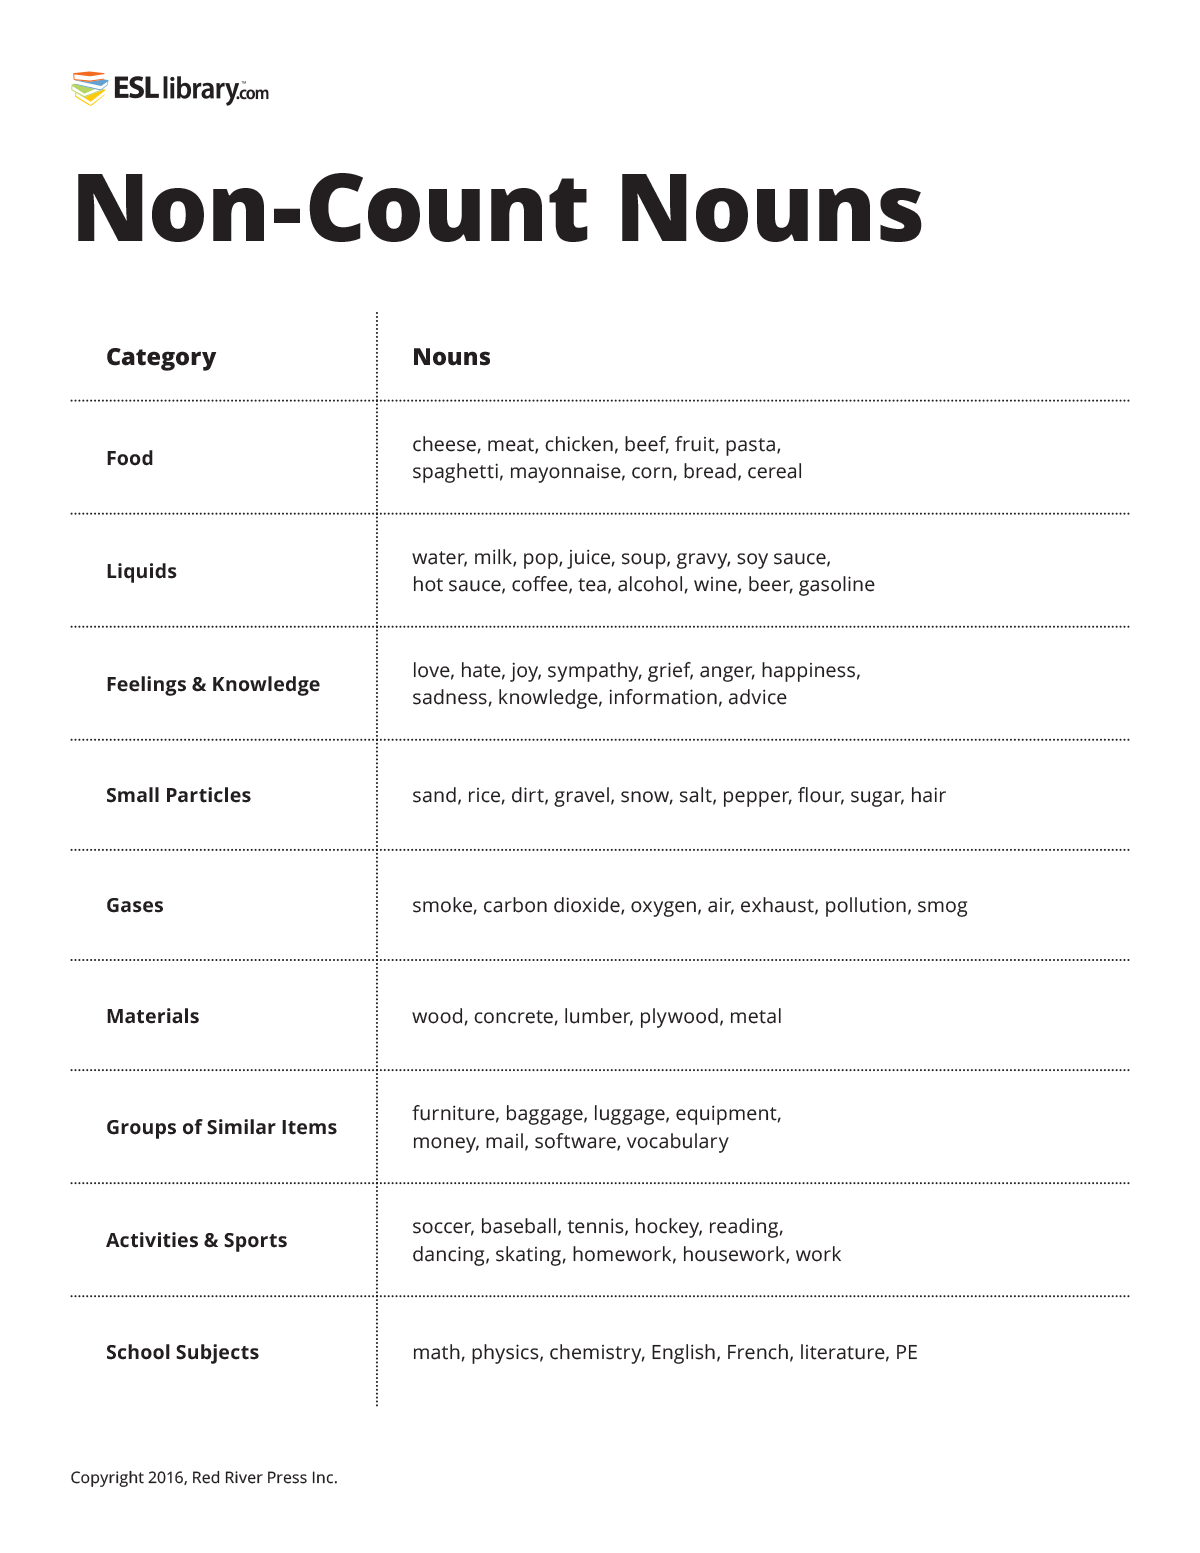 count-non-count-nouns-esl-library